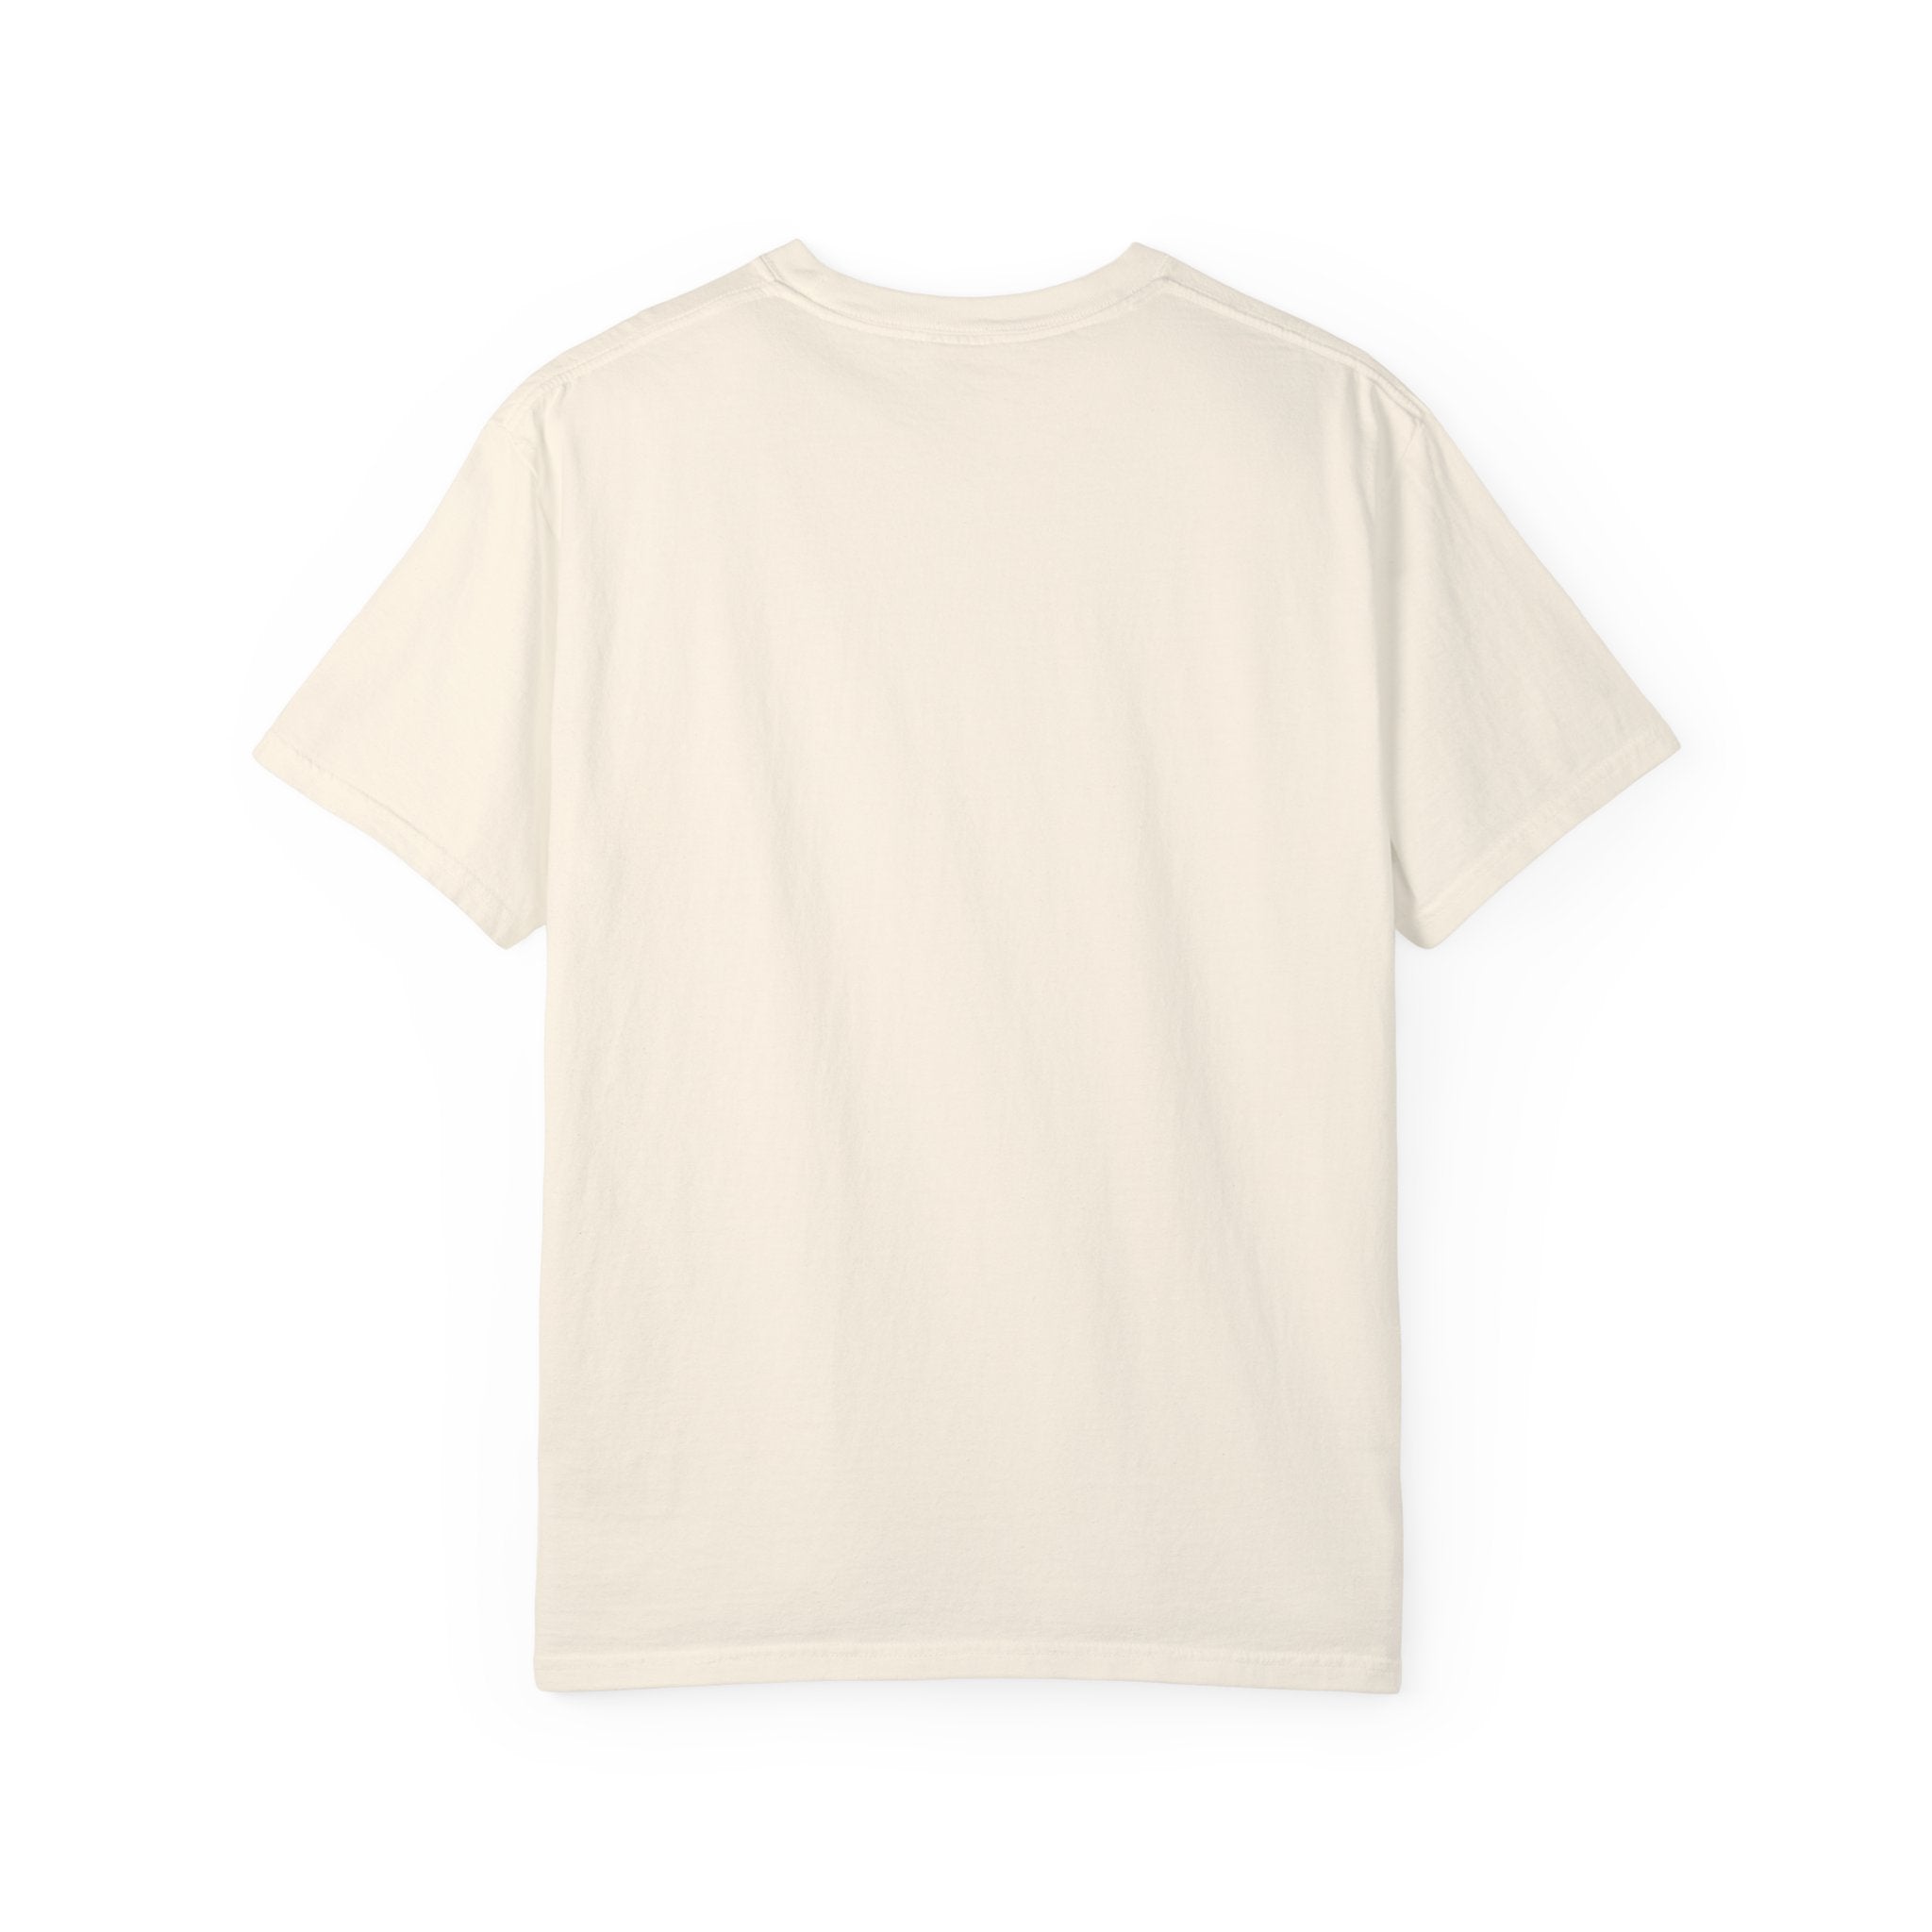 Fairlane ZC - Unisex Garment-Dyed T-shirt